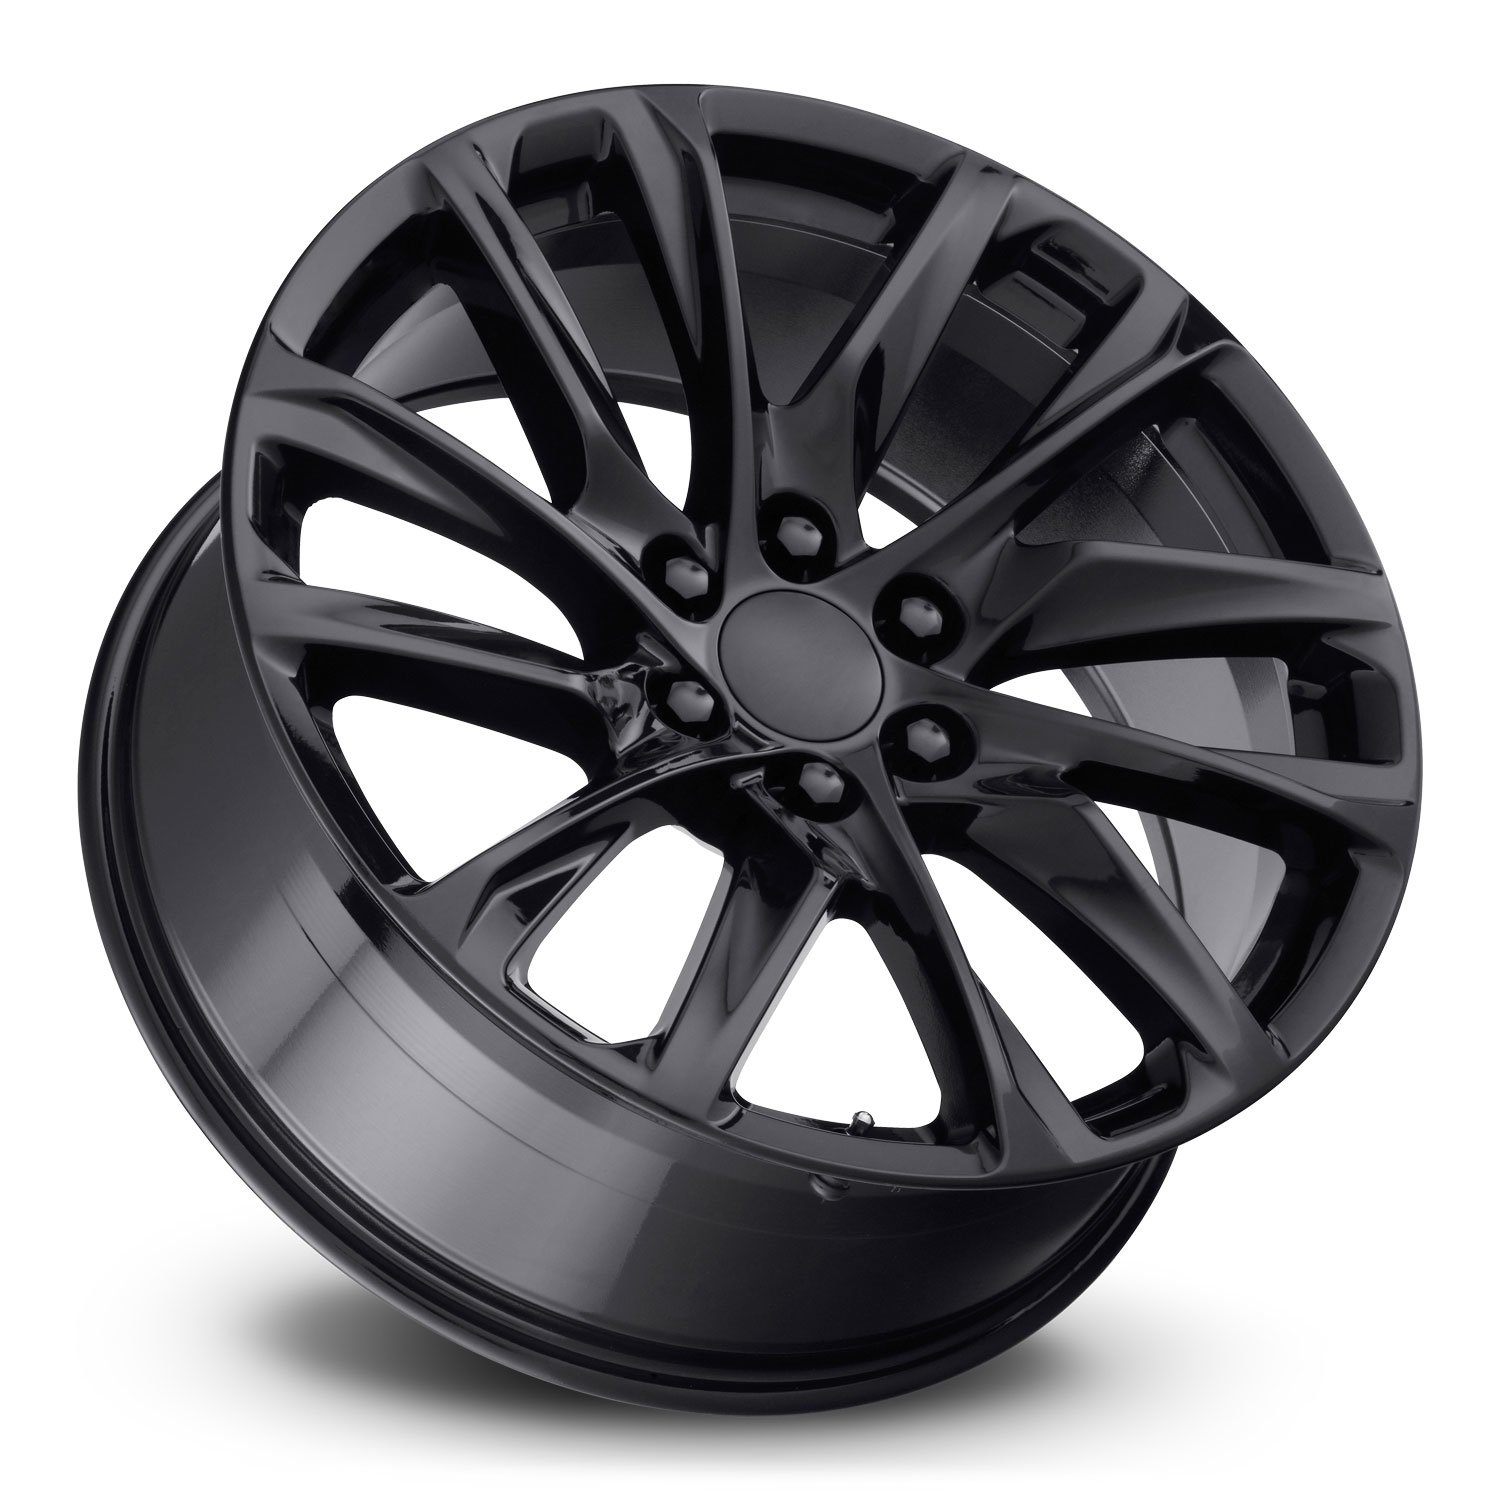 FR98-2290-6lug-Gloss-Black-02-GMC-Escalade-12-spoke-factory-reproductions-wheels-rims-lay-1500